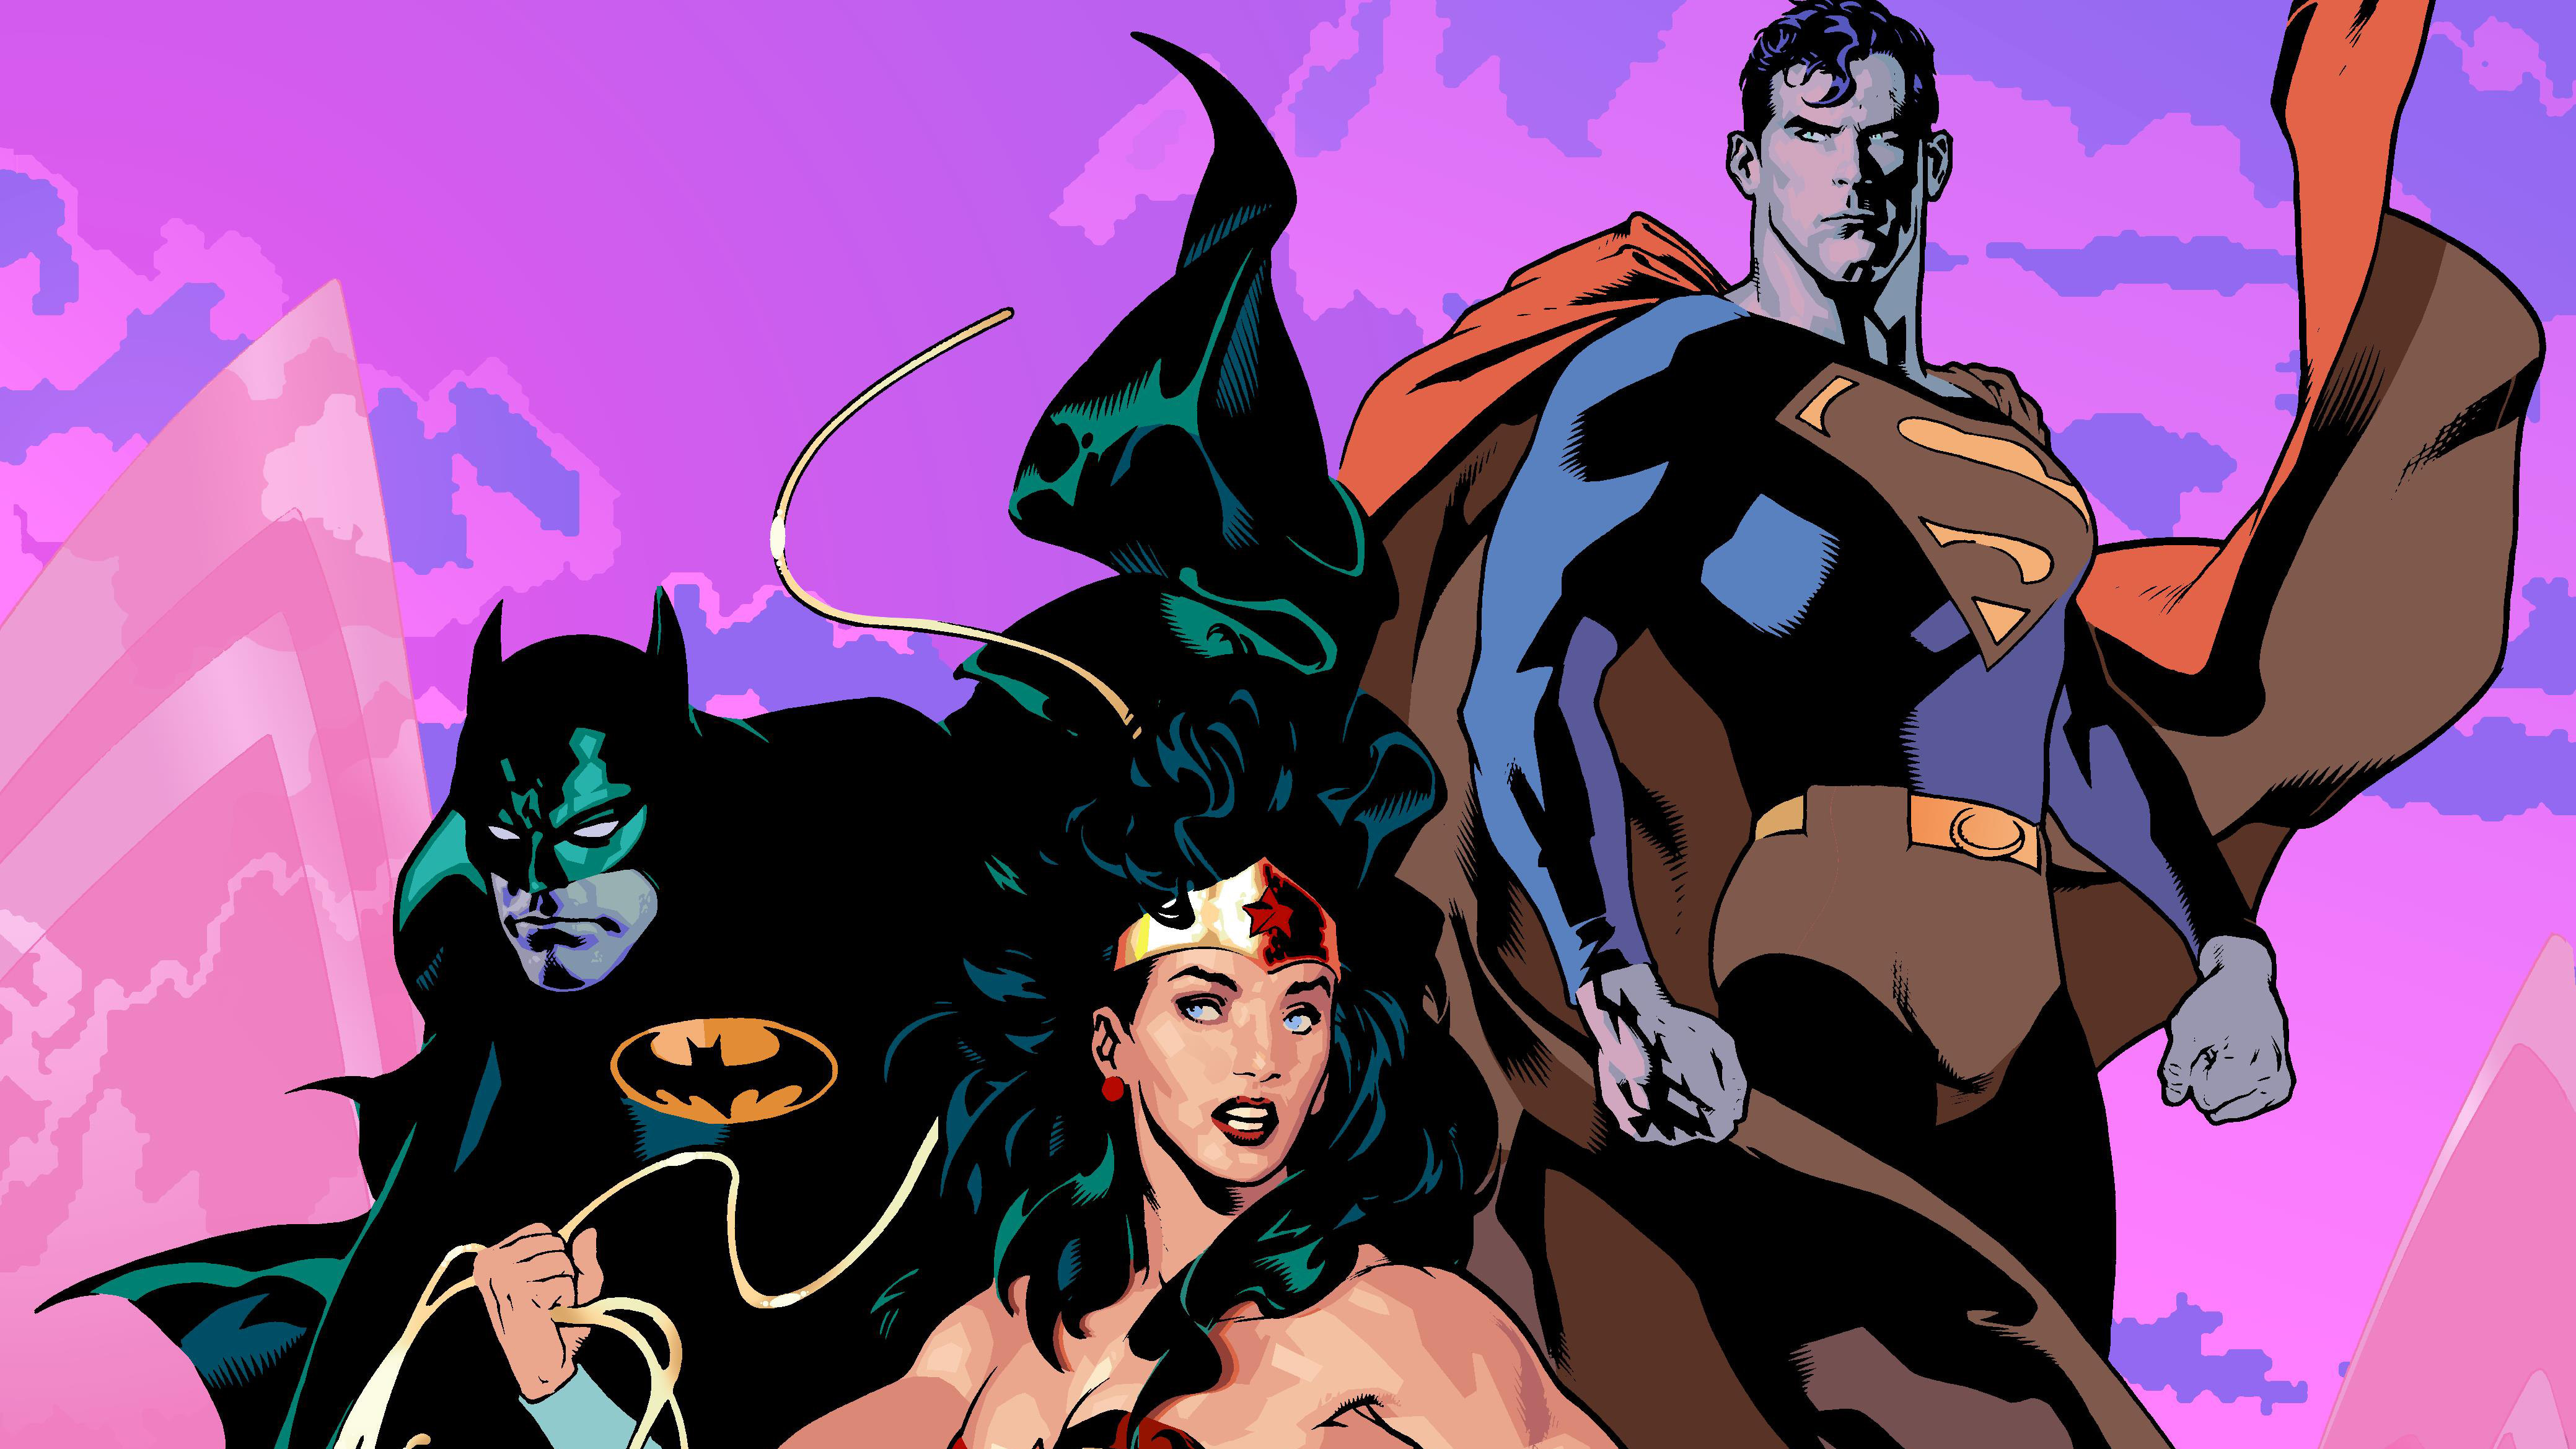 Лига справедливости комикс. Бэтмен чудо женщина слияние арт. Обои на телефон Супергерои чудо женщина. Nexus batman